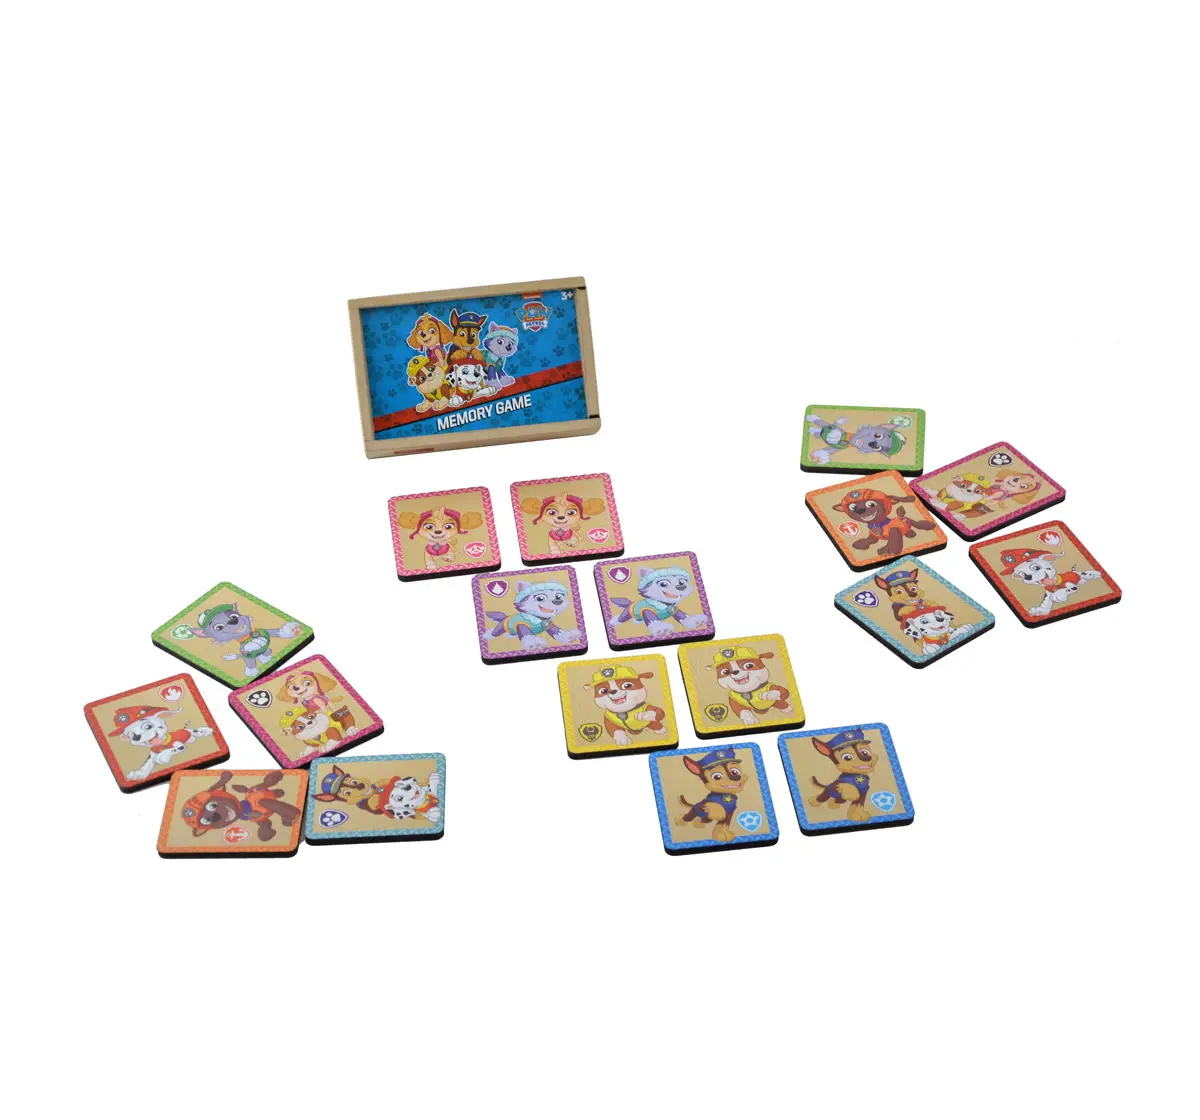 Skillofun Paw Patroll Memory Game, Jigsaw Puzzle For Kids, 3Y+